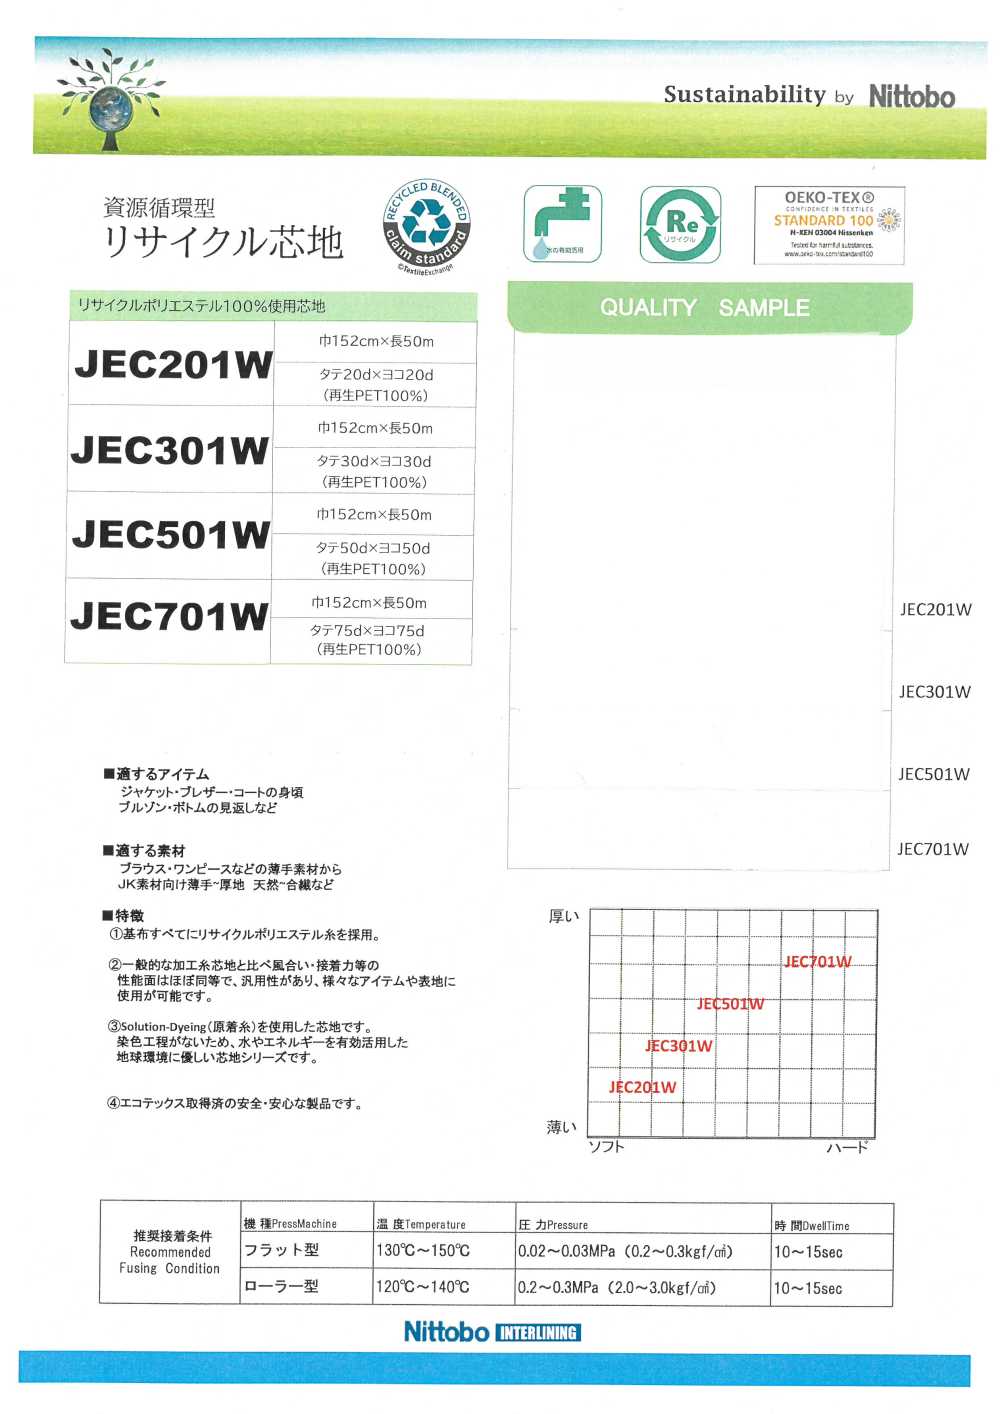 JEC201W 薄型多功能柔软衬布 20D 使用再生材料 日东纺绩